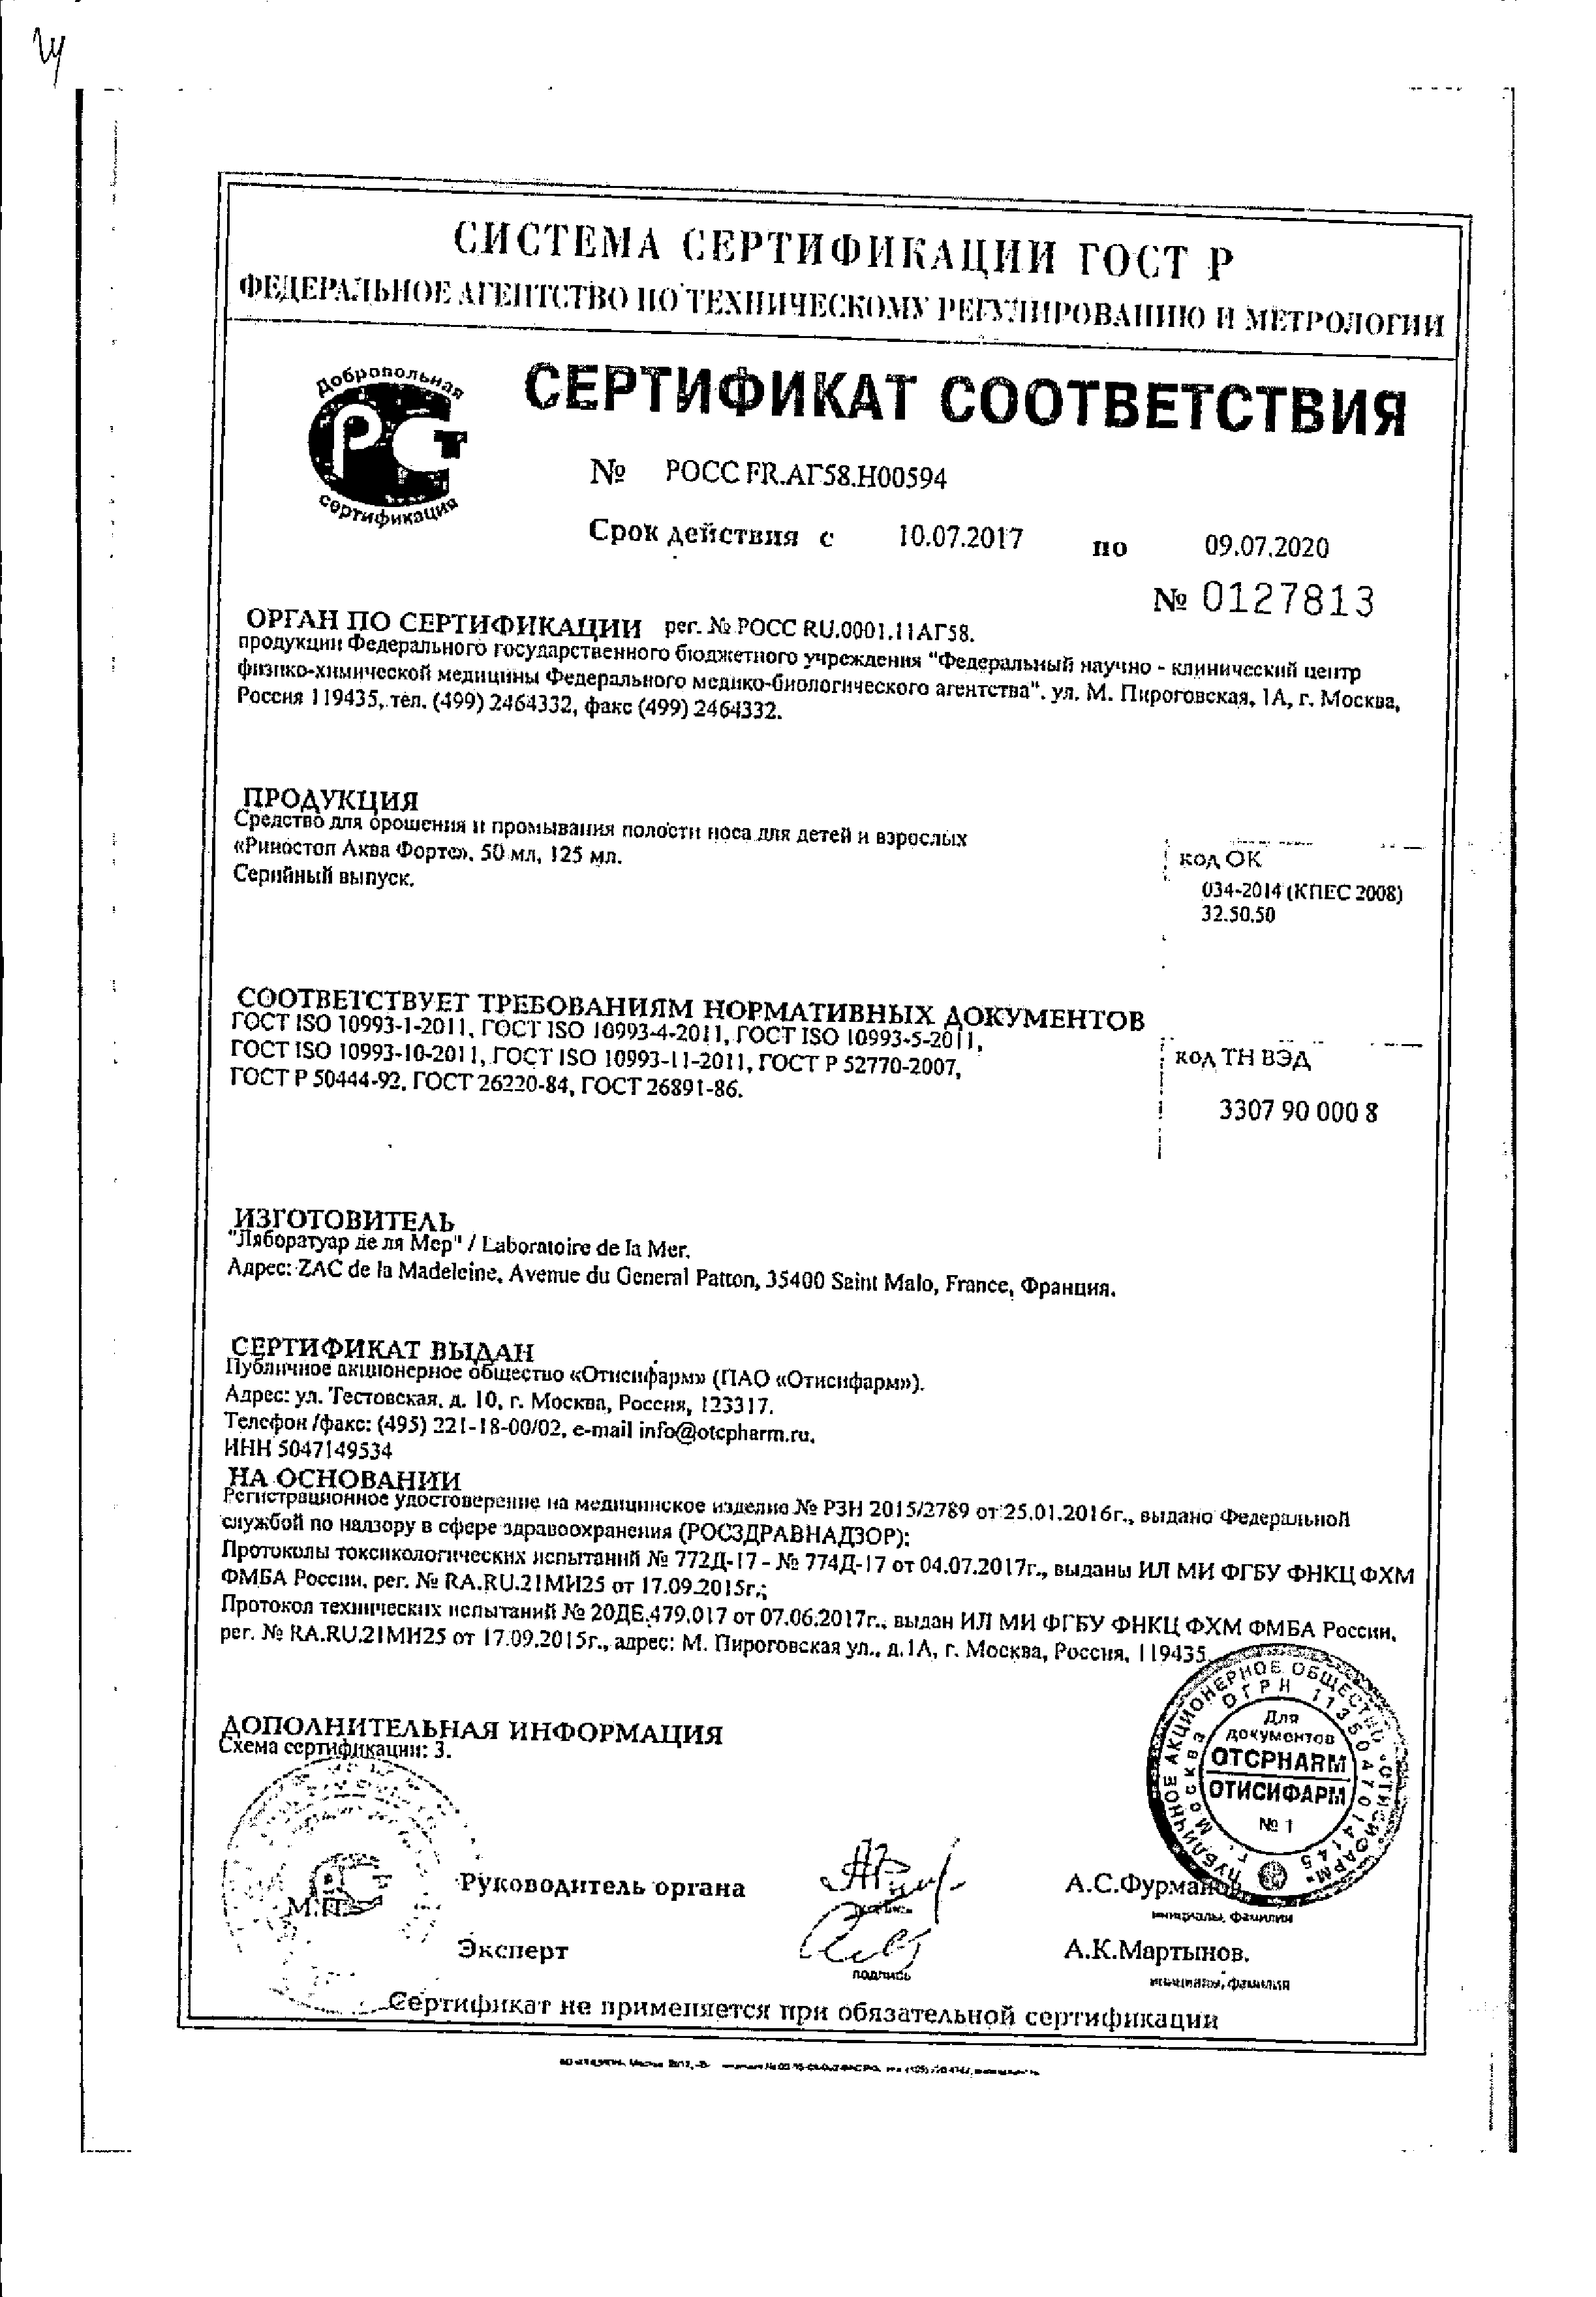 Риностоп Аква Софт сертификат